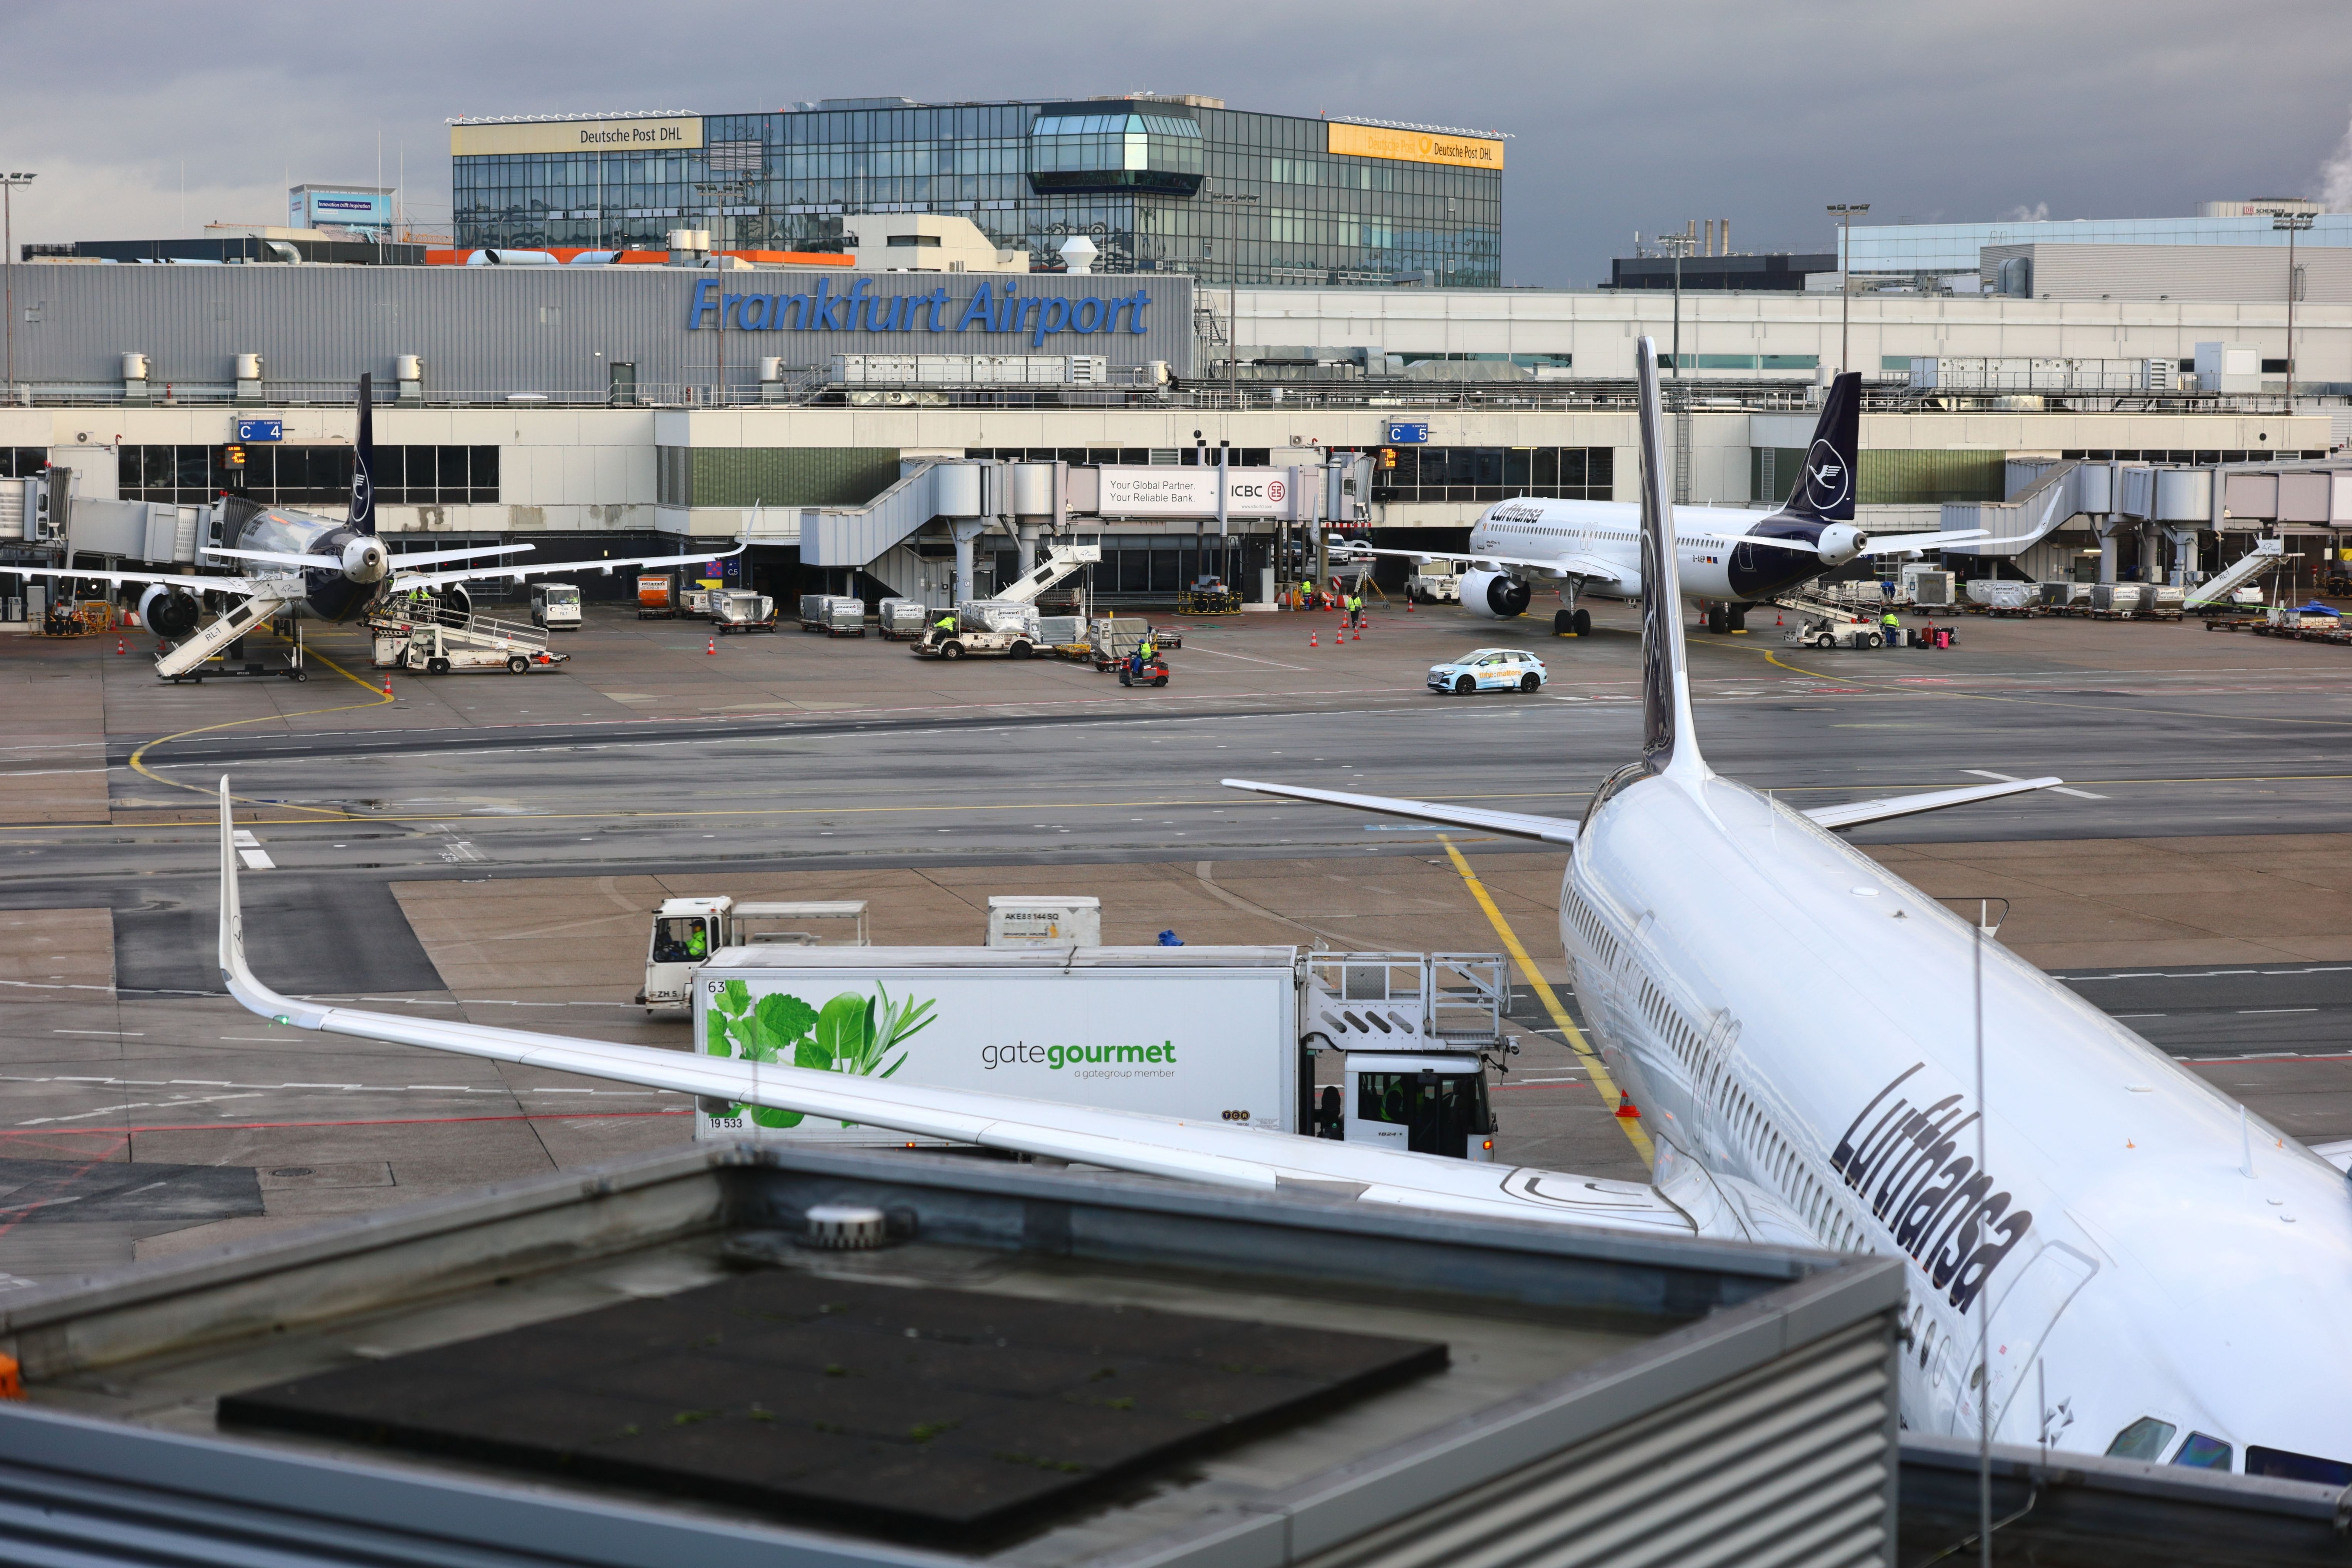 Several Lufthansa aircraft parked at gates on the apron at Frankfurt Airport.